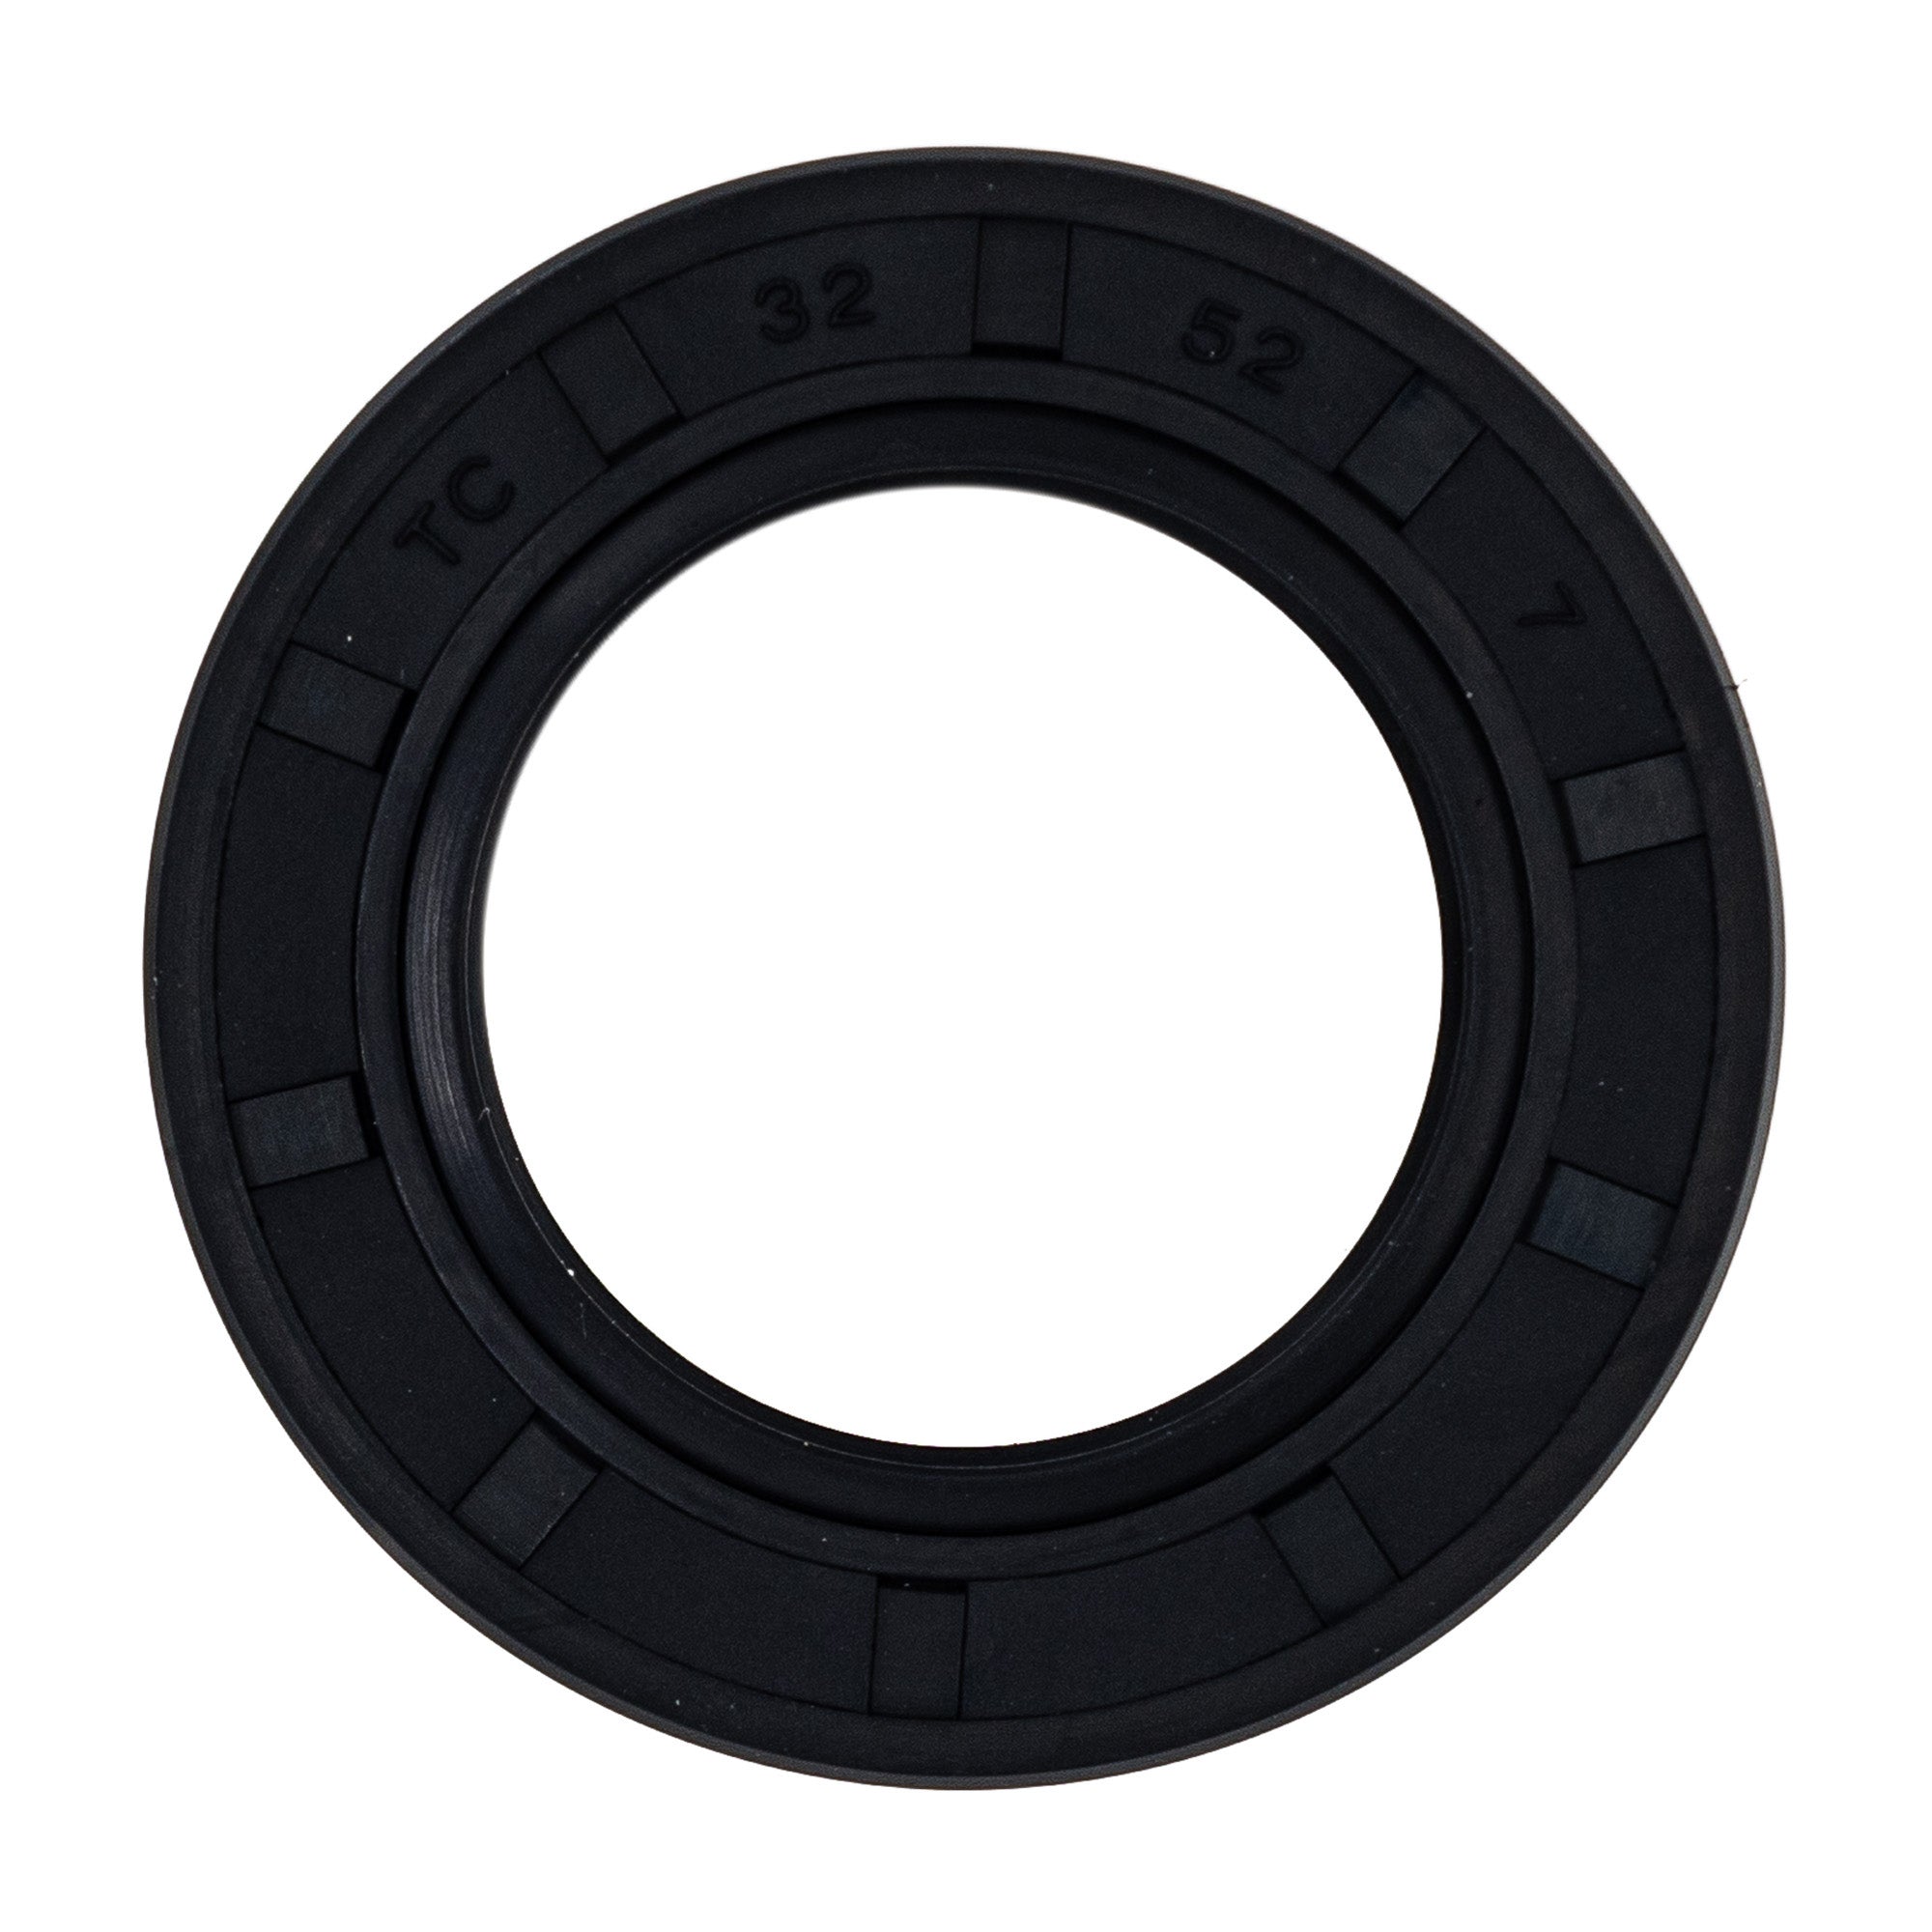 Wheel Bearing Seal Kit for KTM 640 LC4 6906-2RS 3205-2RS Motorcycle